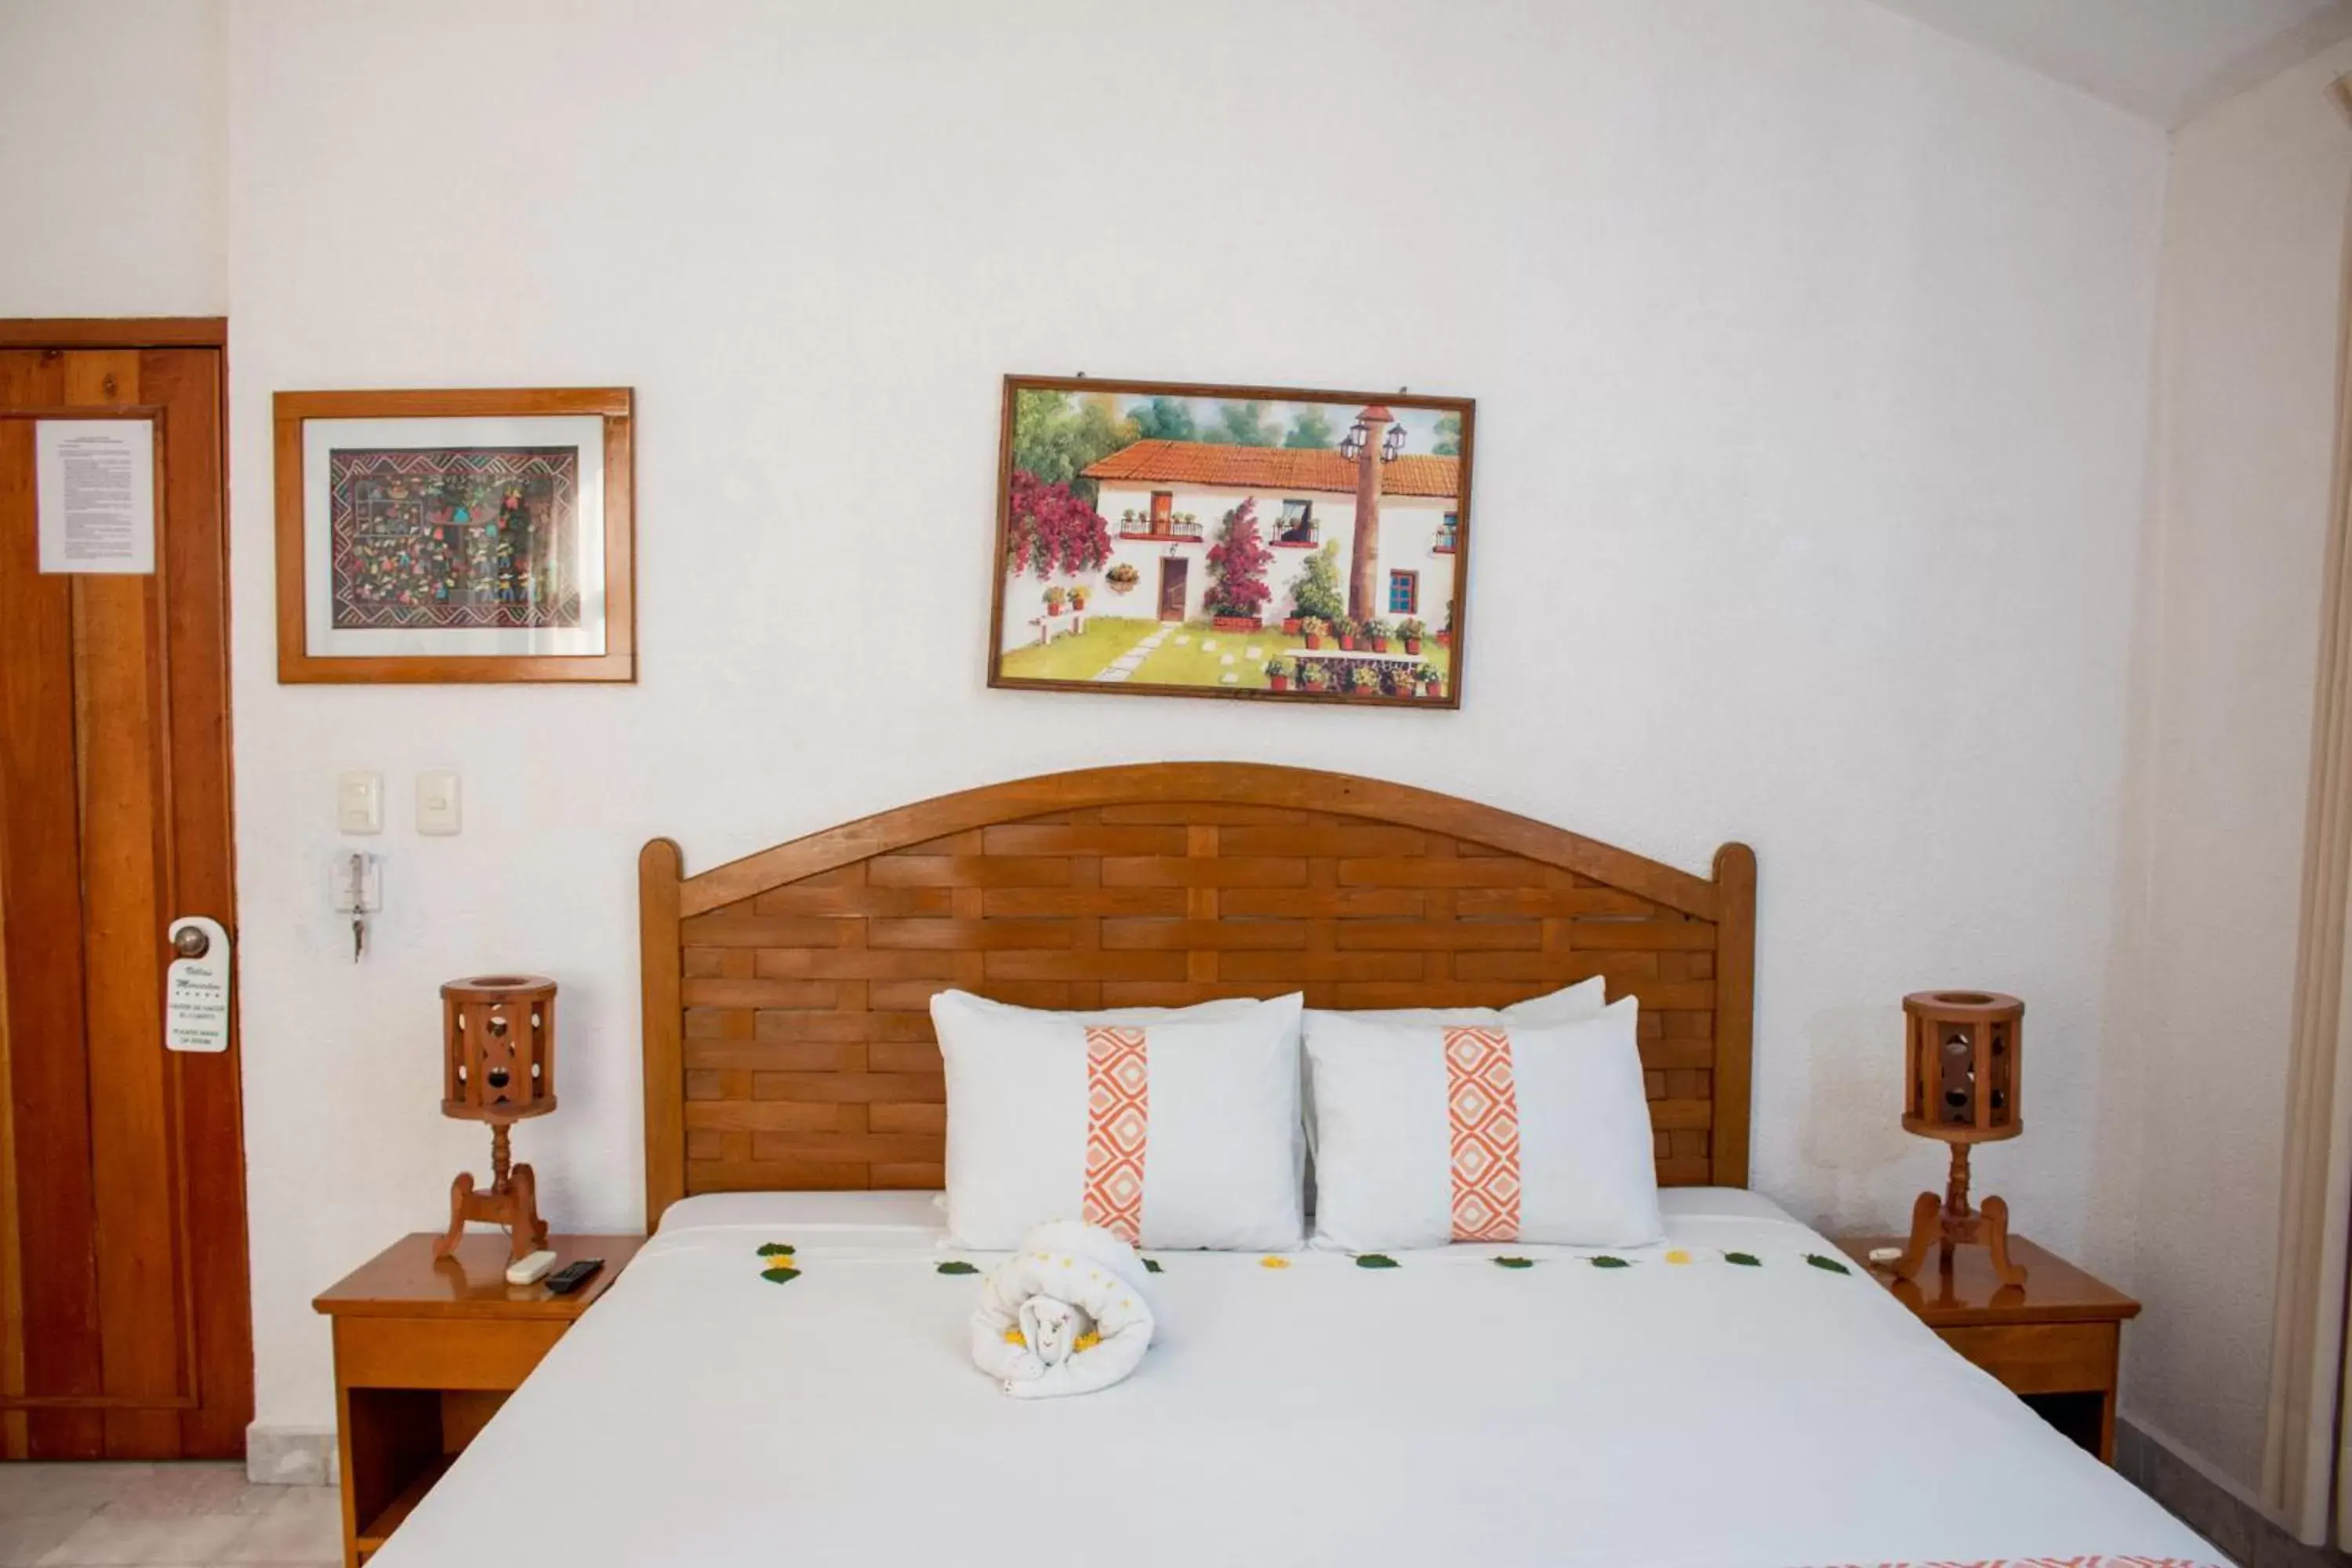 Bed, Room Photo in Villas Mercedes